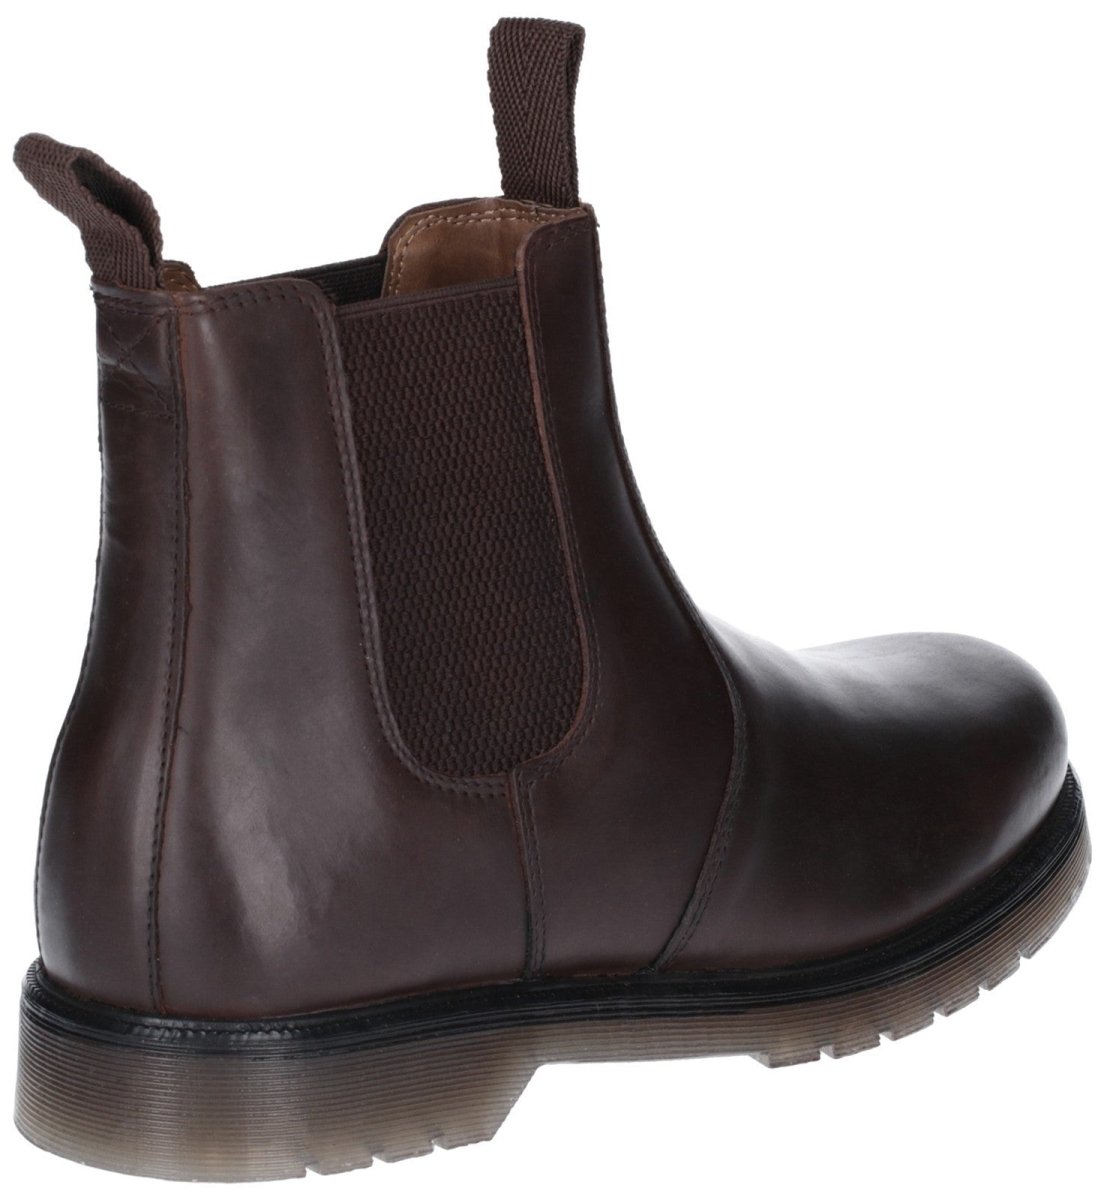 Amblers Chelmsford Ladies Dealer Boots - Shoe Store Direct